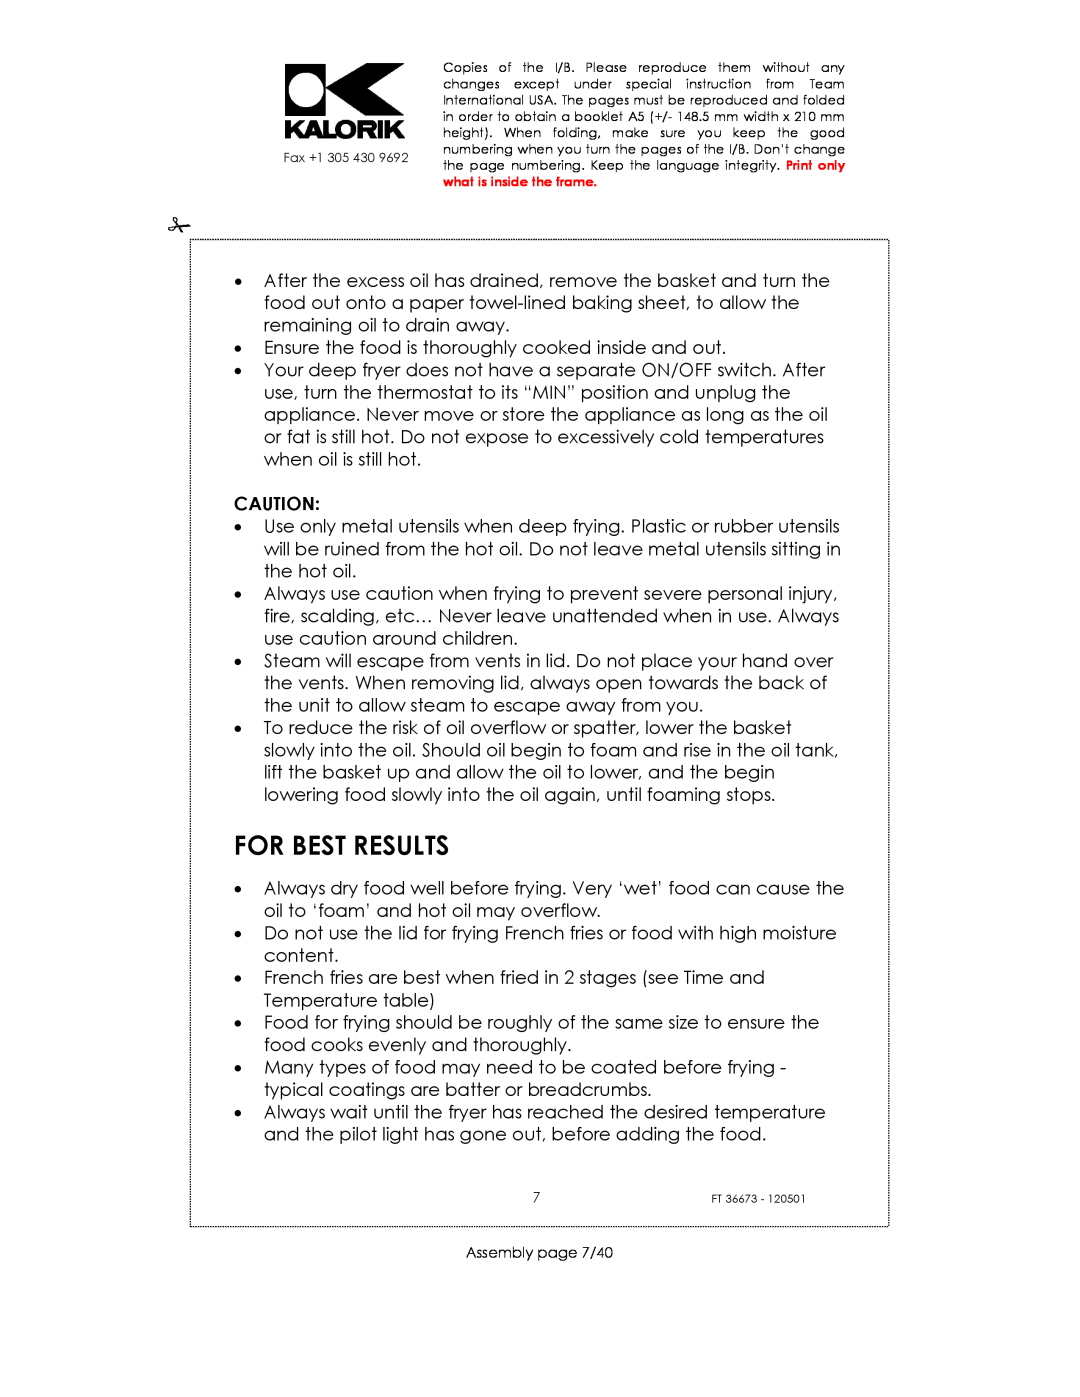 Kalorik USK FT 36673 manual For Best Results, Assembly page 7/40 